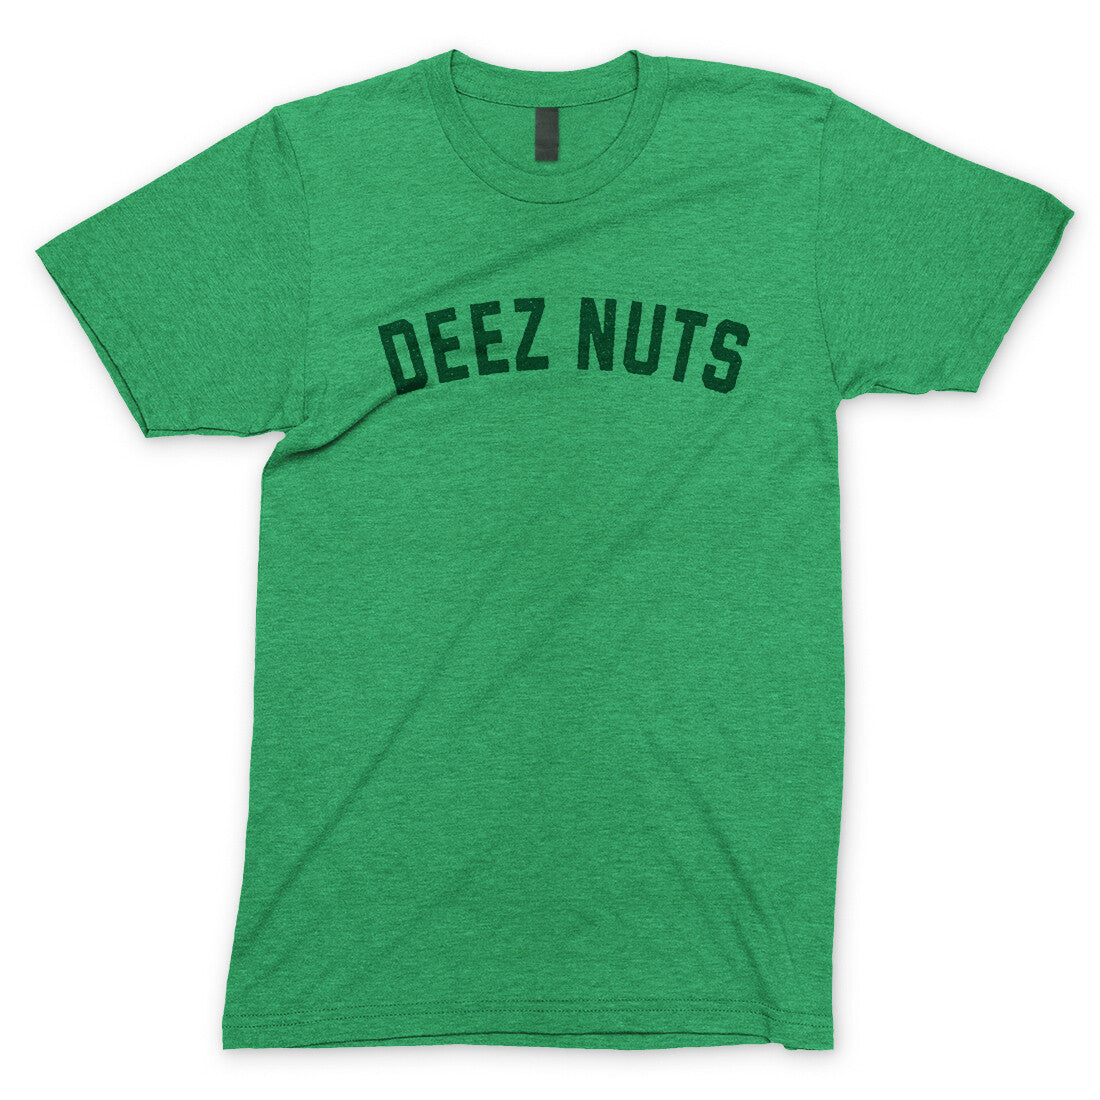 Deez Nuts in Heather Irish Green Color